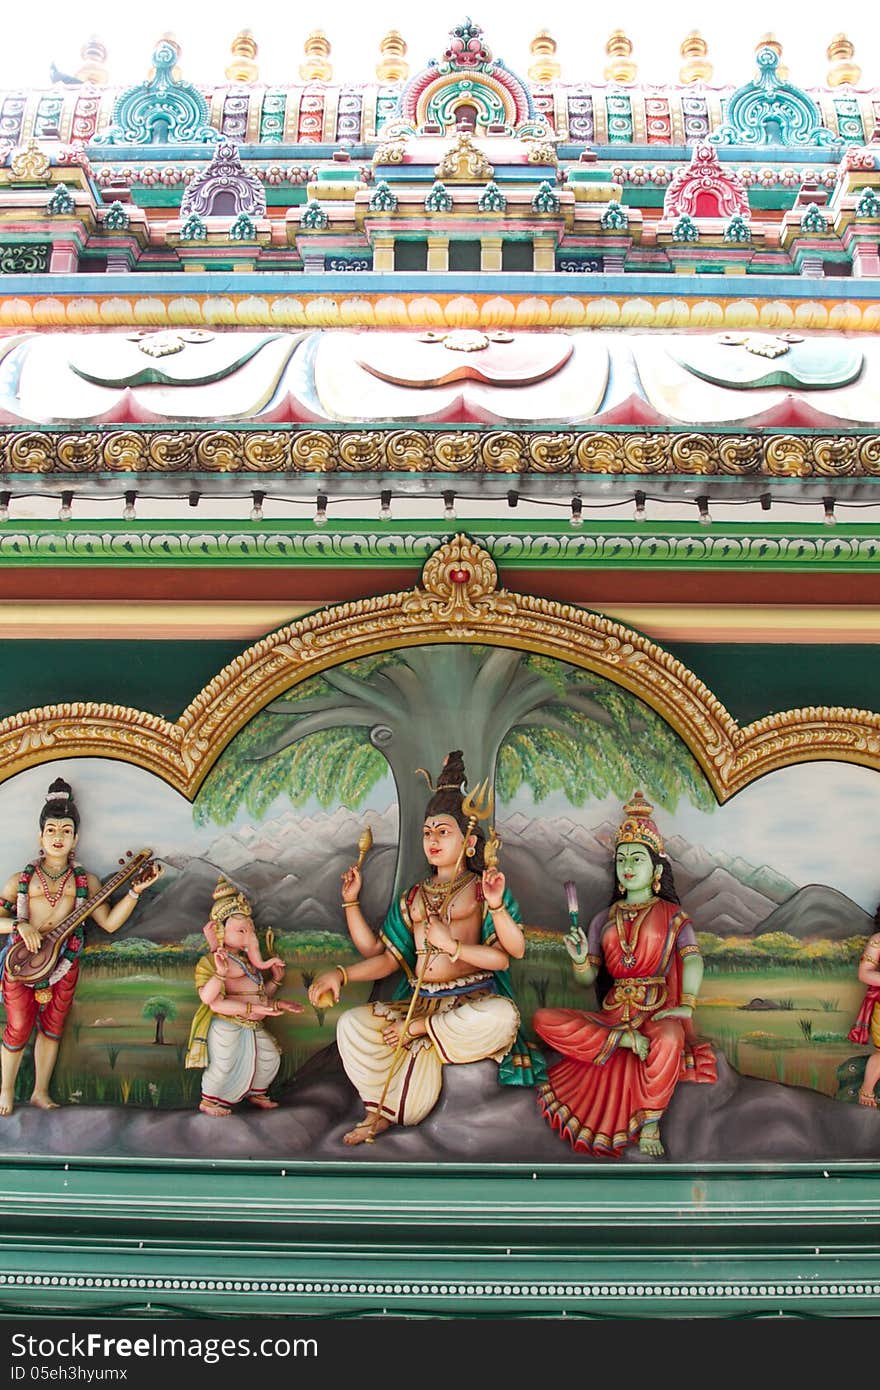 A detail of an hindu temple